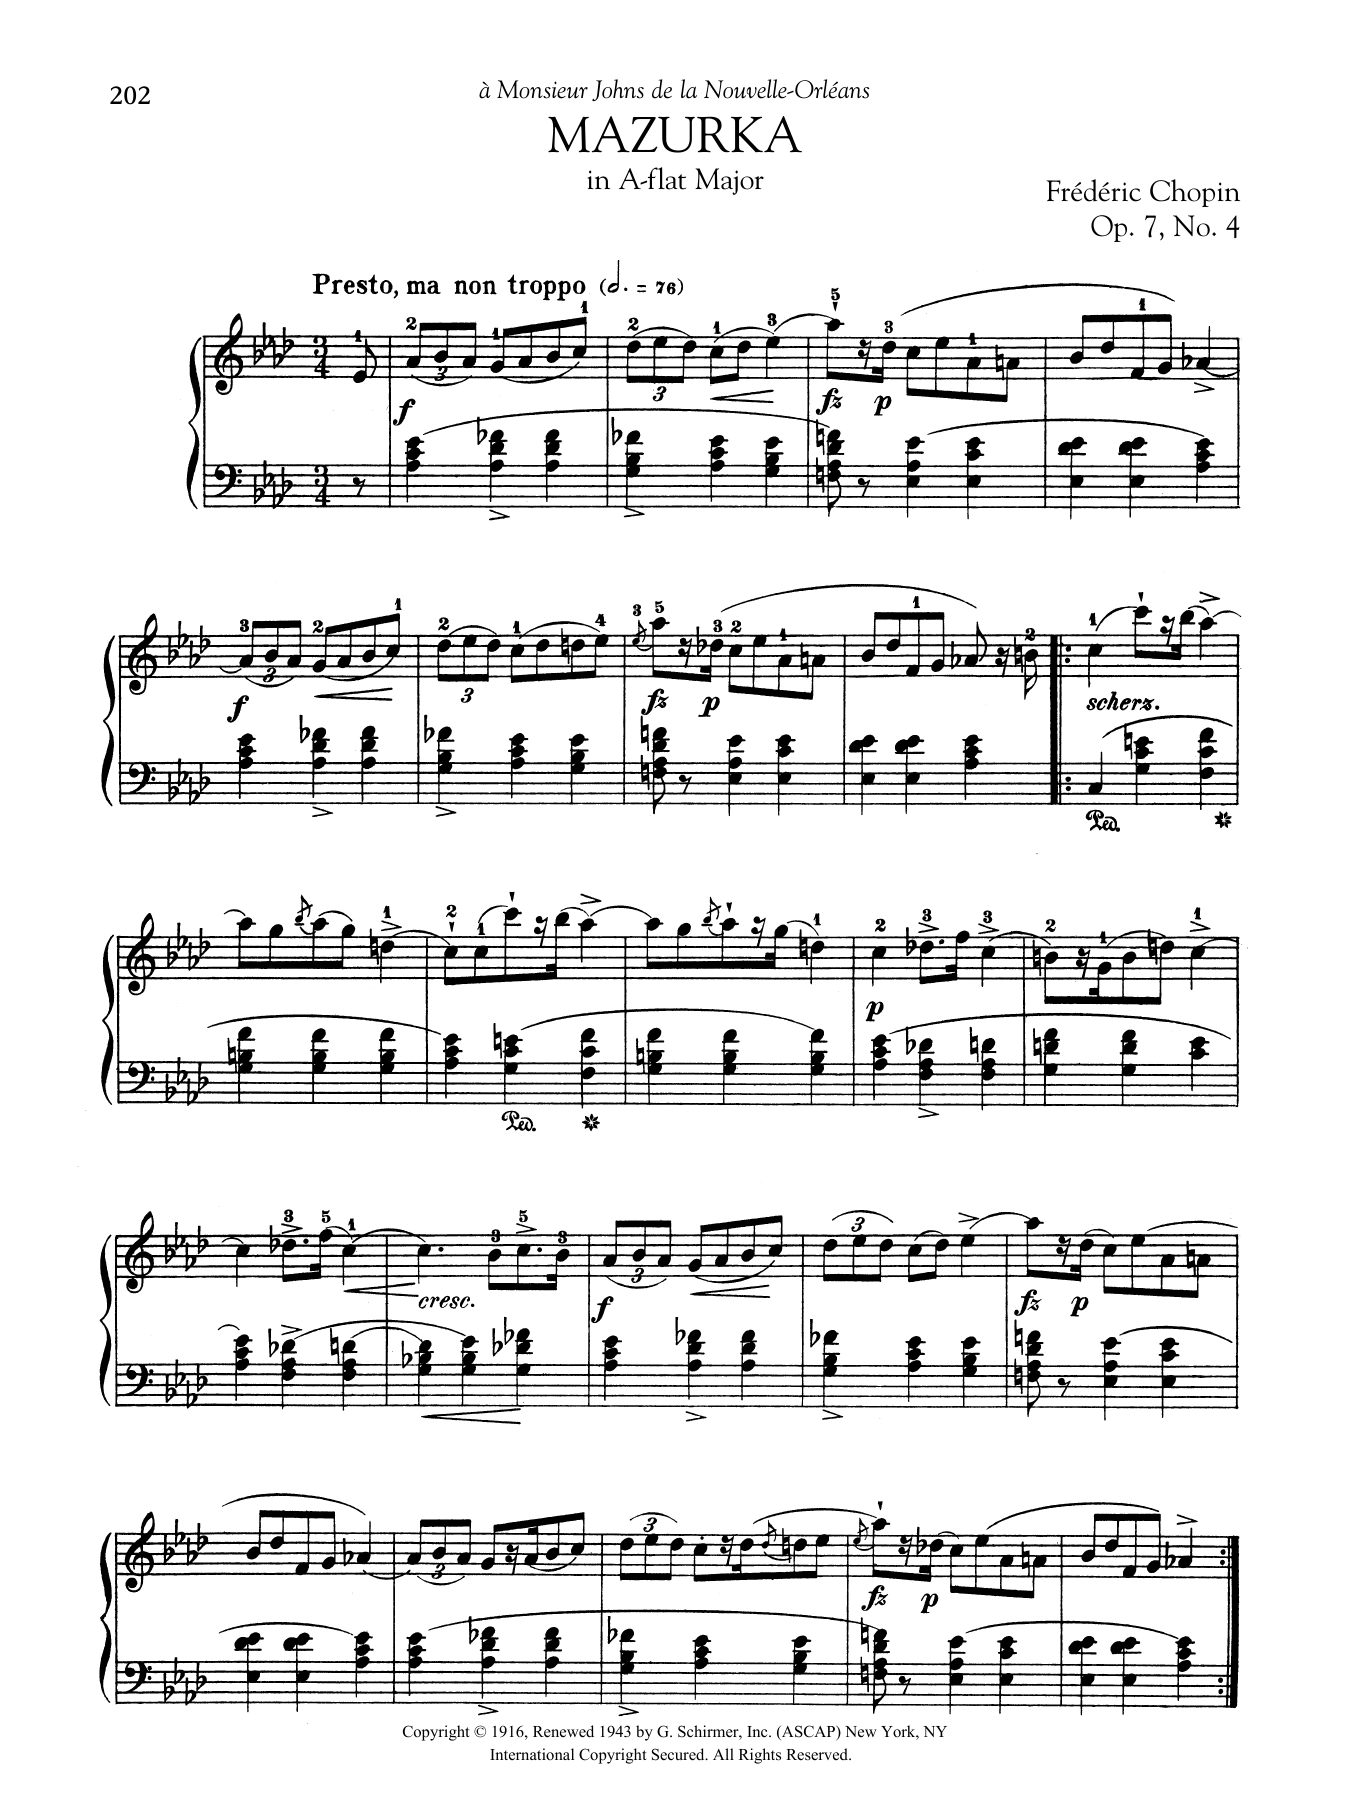 Download Frederic Chopin Mazurka in A-flat Major, Op. 7, No. 4 Sheet Music